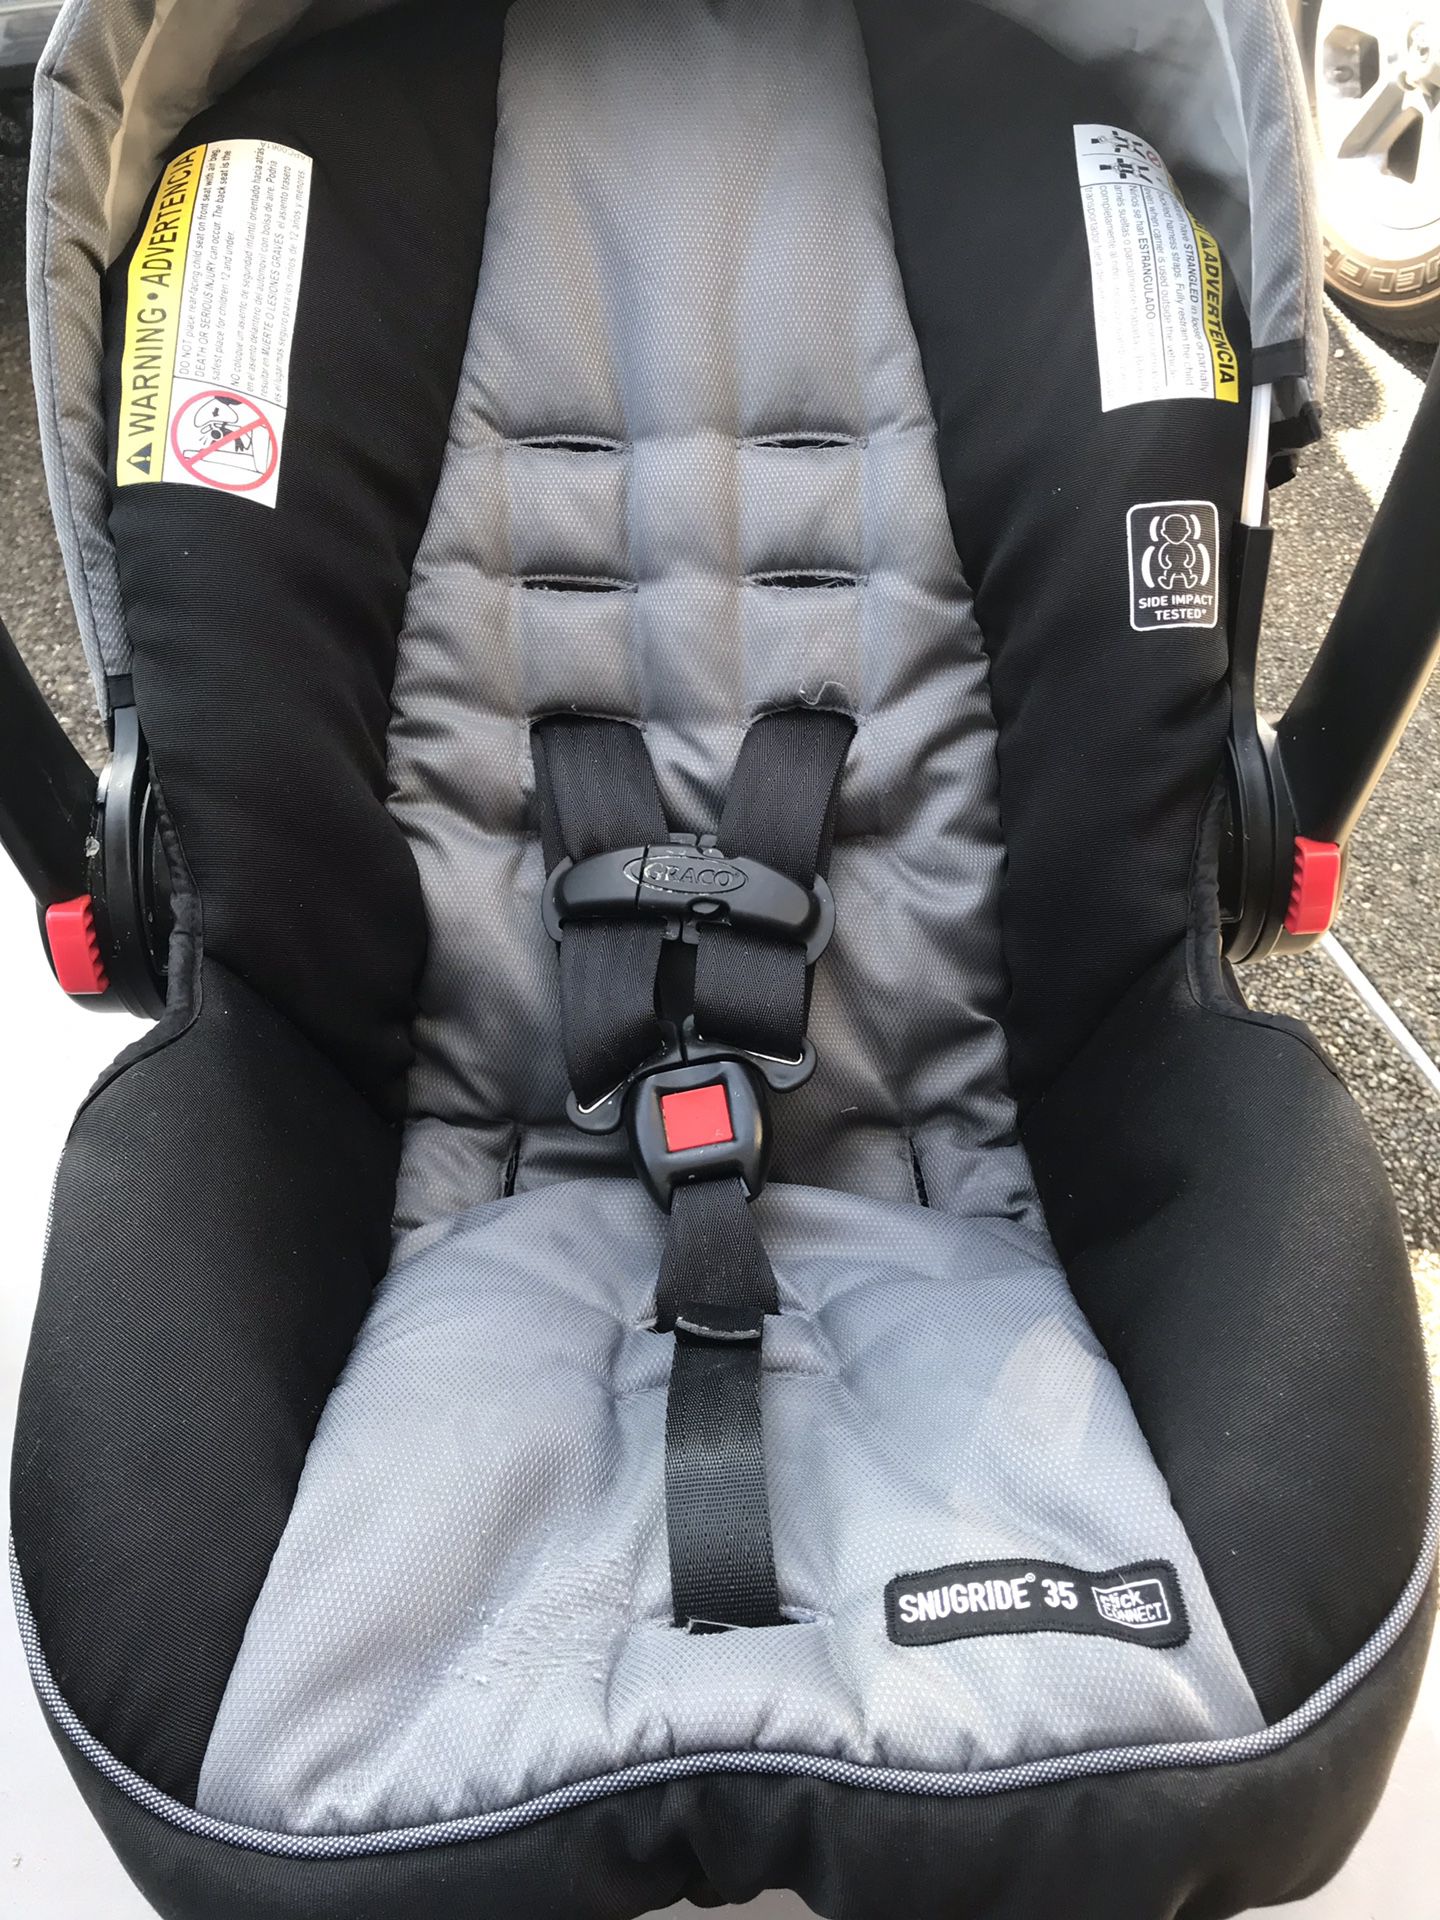 Graco snugride 35 baby car seat -$15